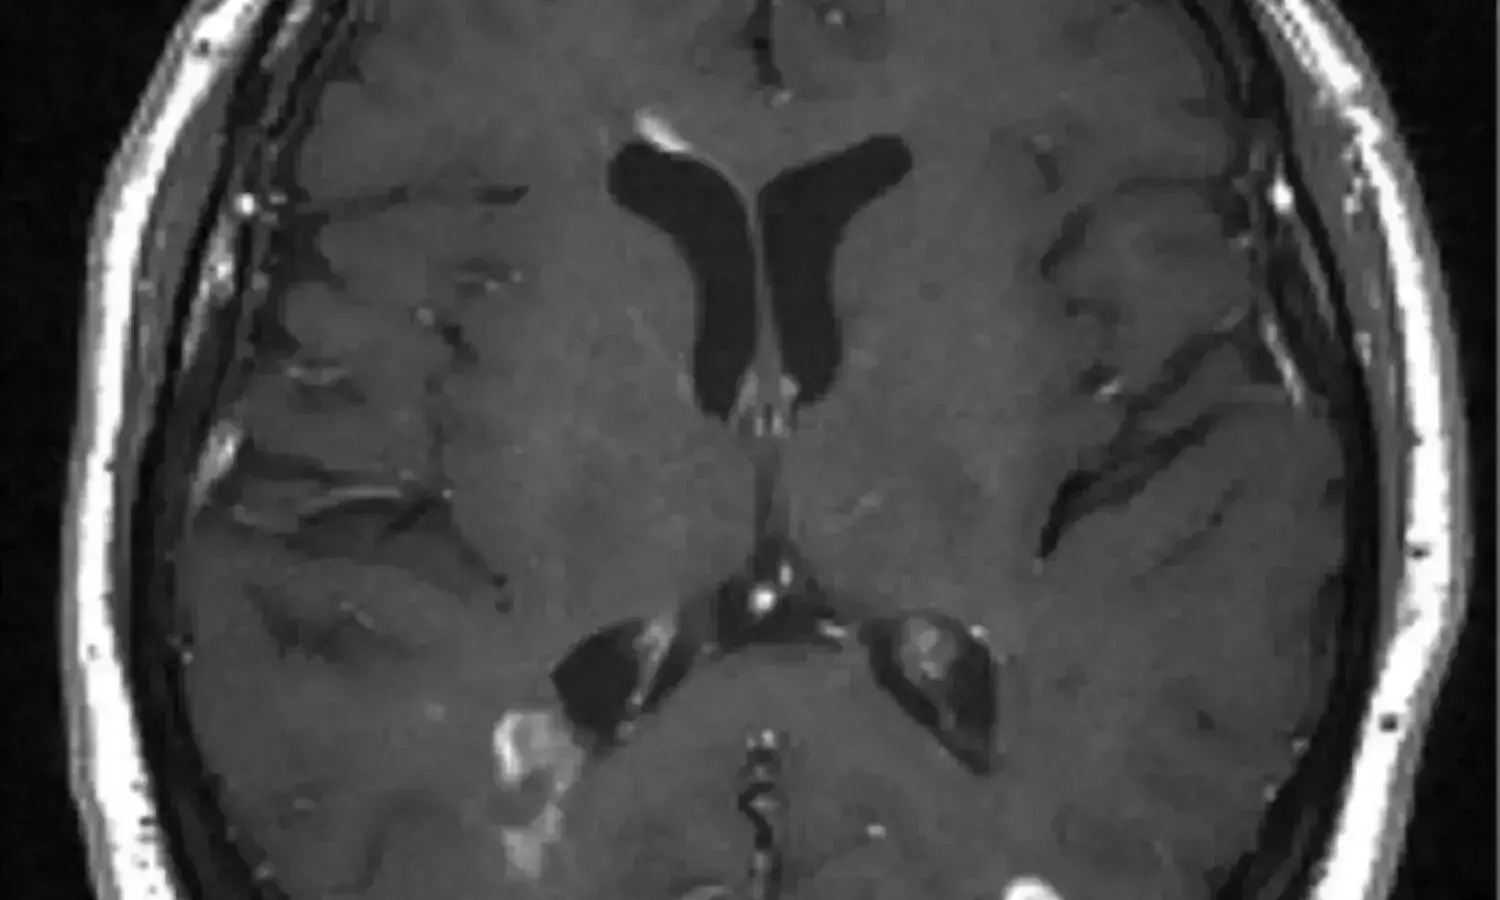 New MRI technique detects MS brain changes earlier